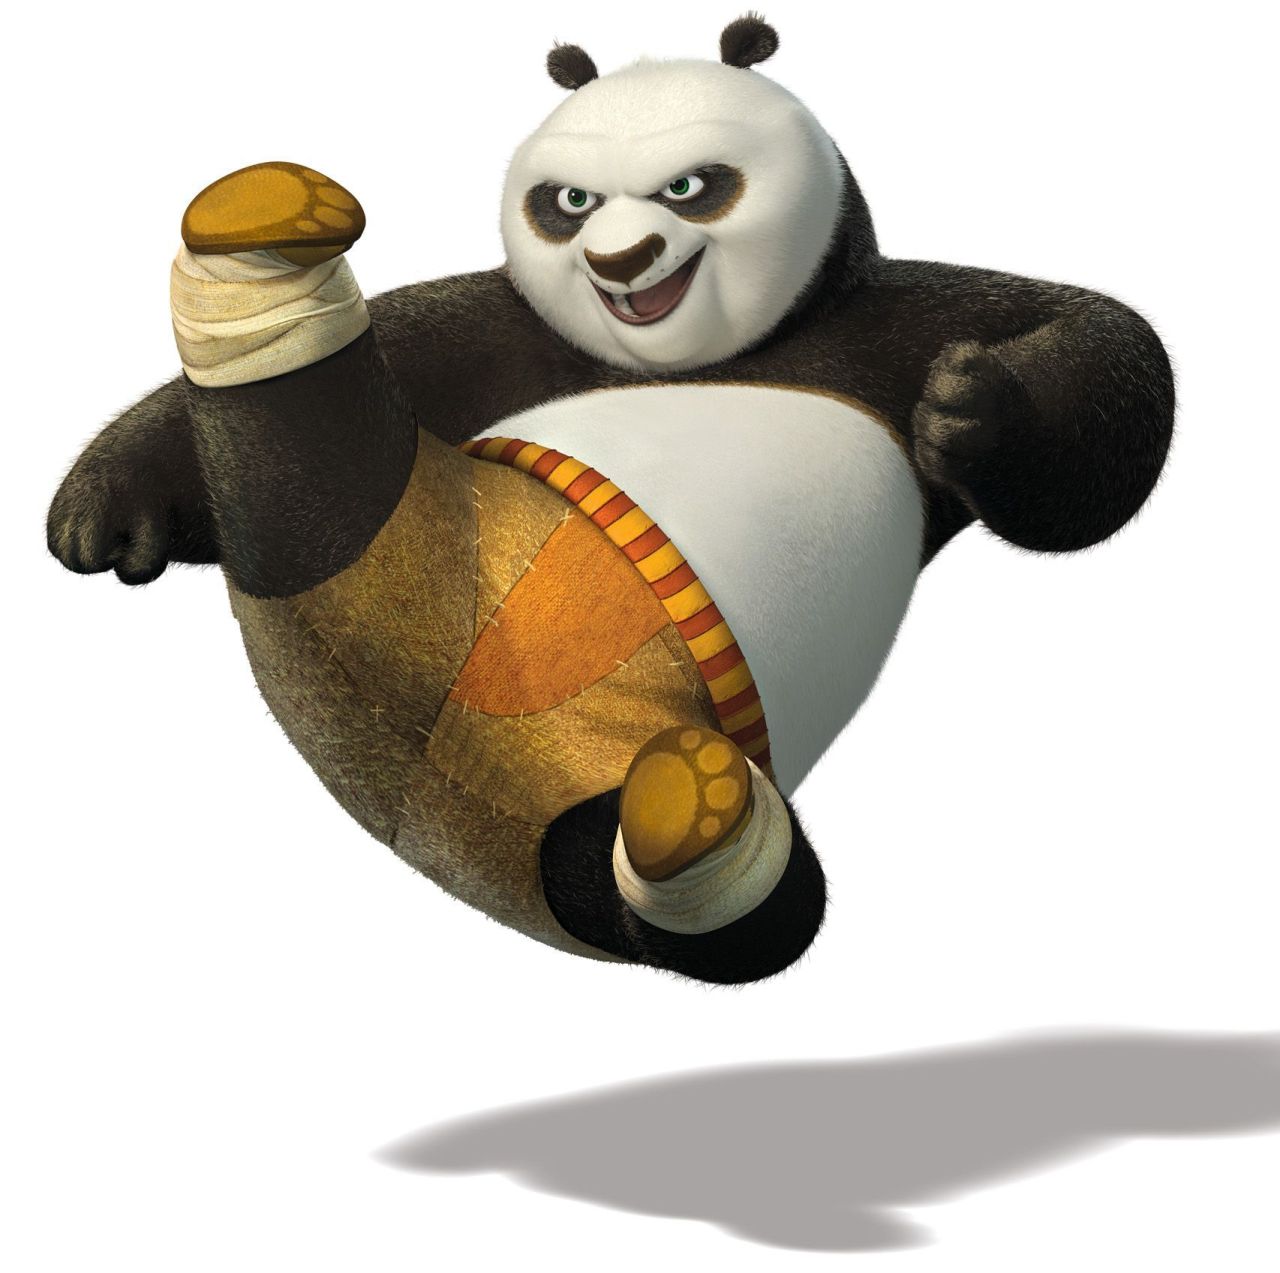 winnie the pooh vs po the kung foo panda - Drawception